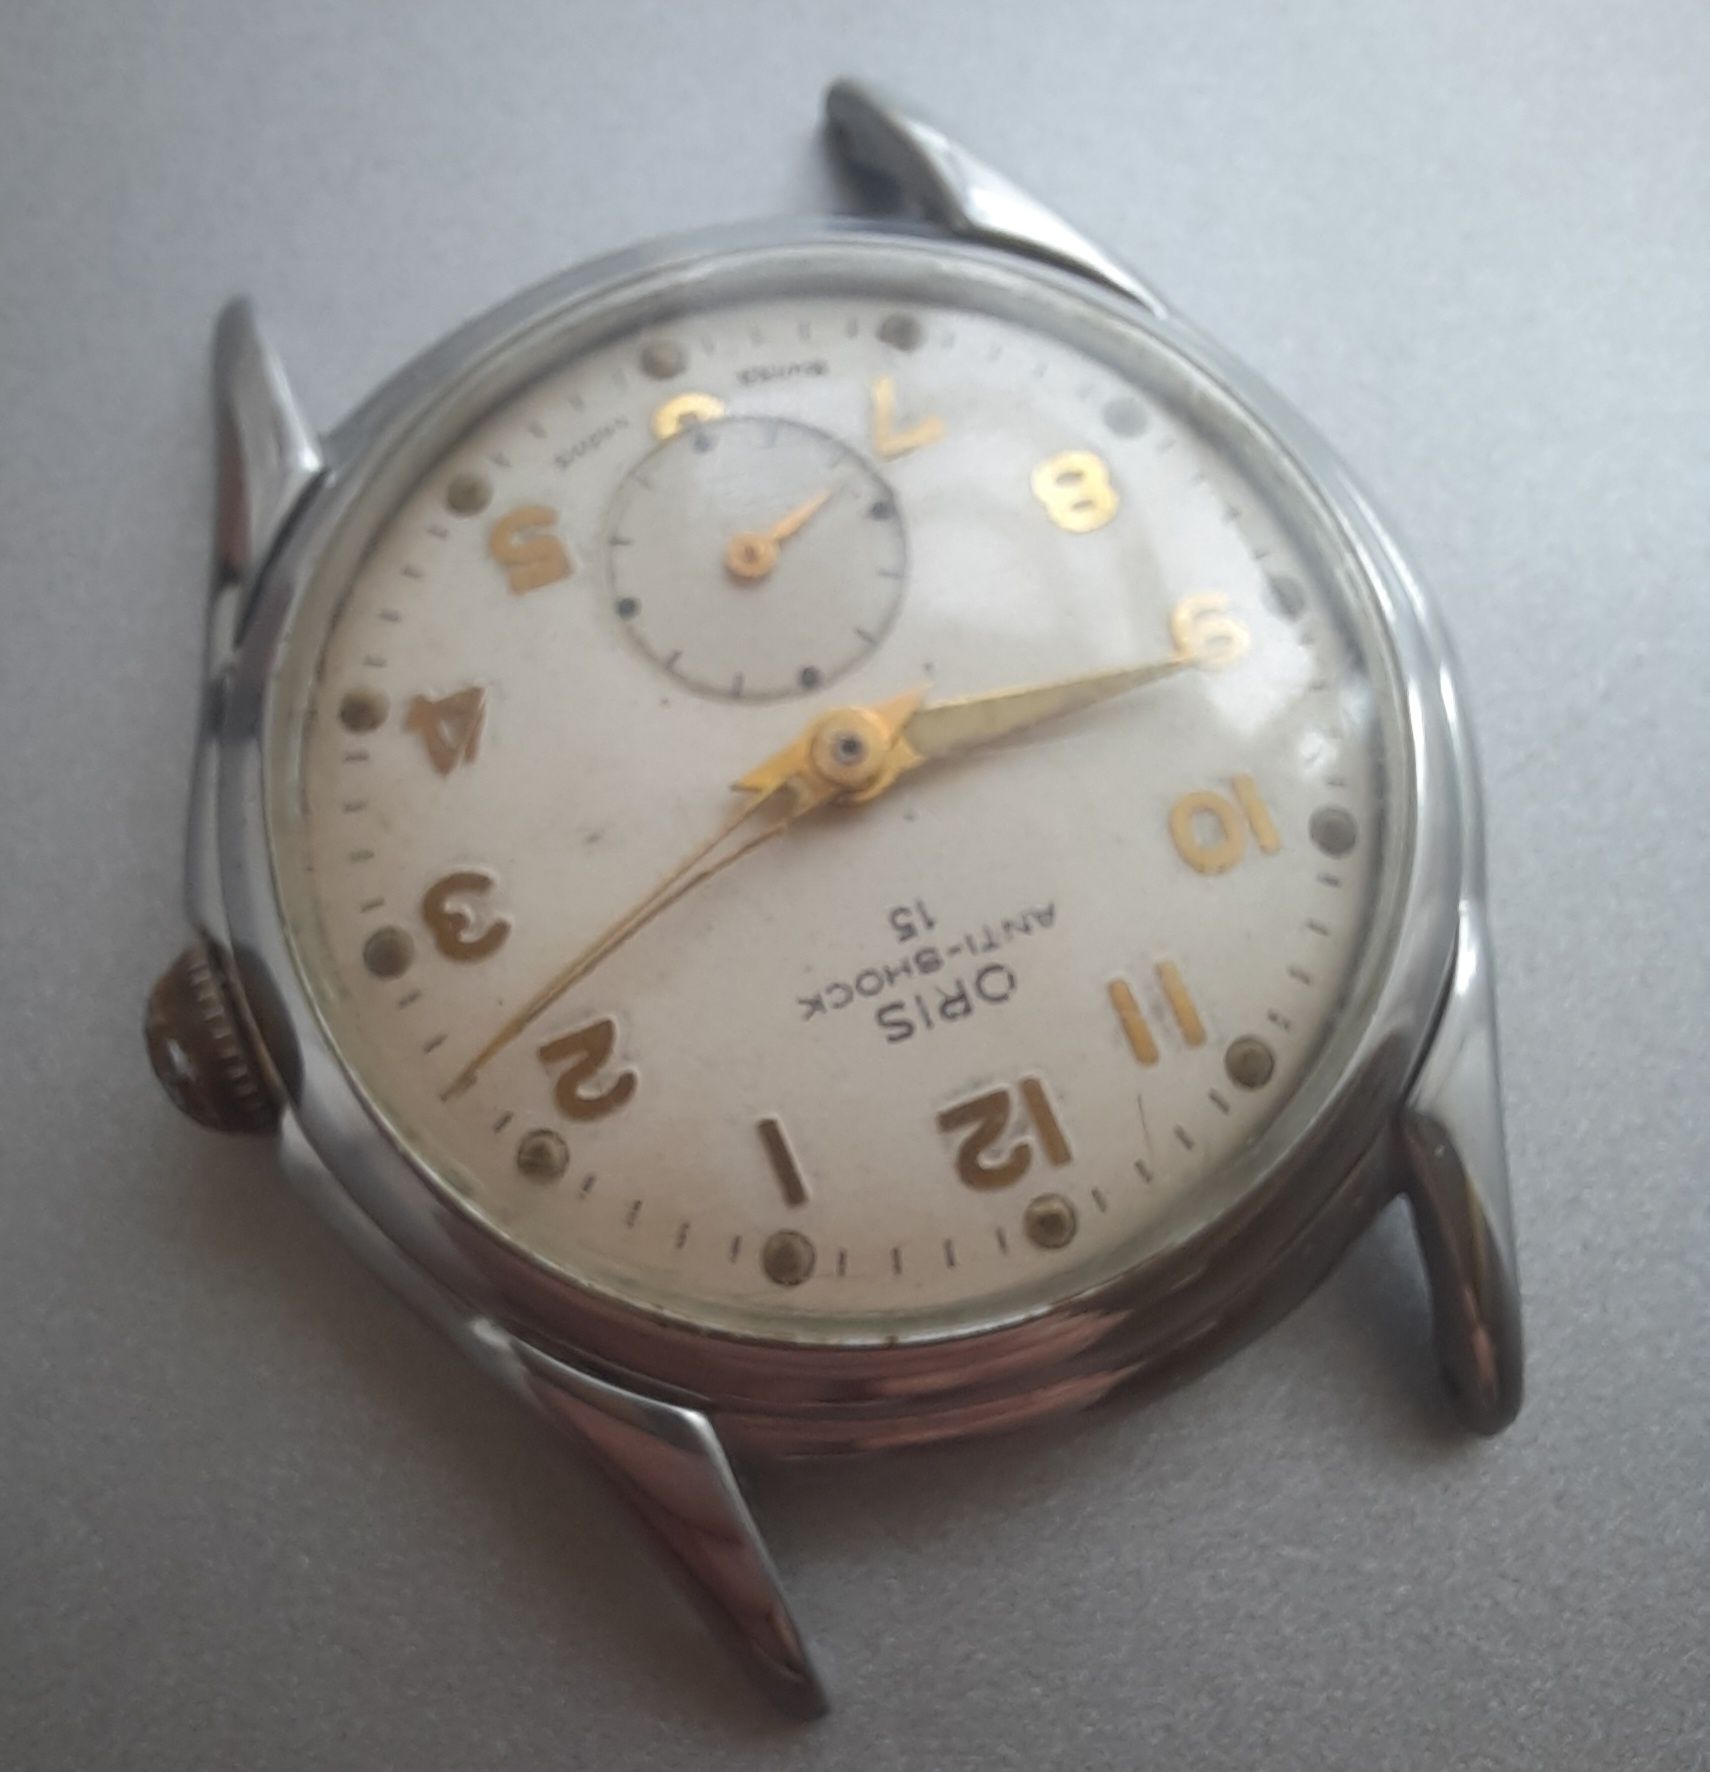 Zegarek Oris cal. 451 kif. Vintage do renowacji